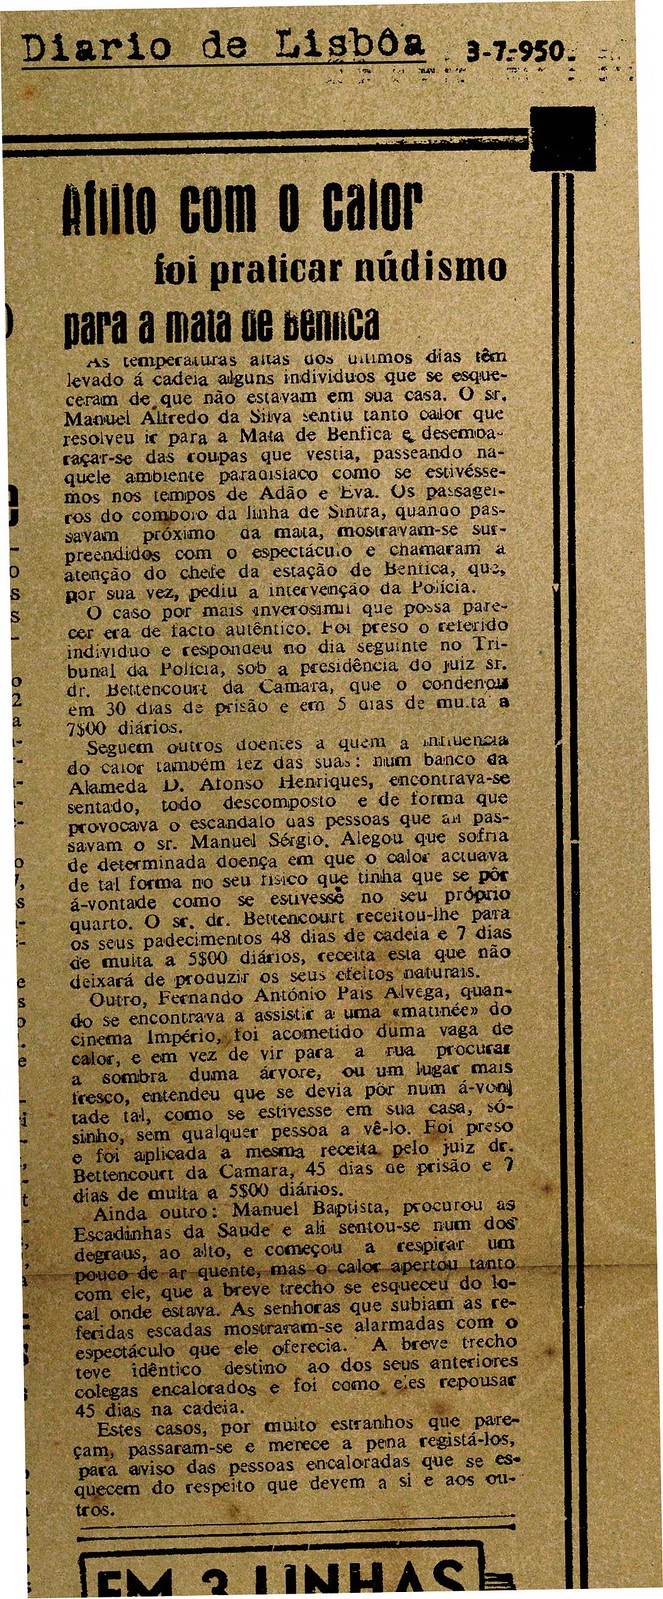 «Aflito com o calor foi praticar nudismo para a mata de Benfica», in Diario de Lisbôa, 3/VII/950